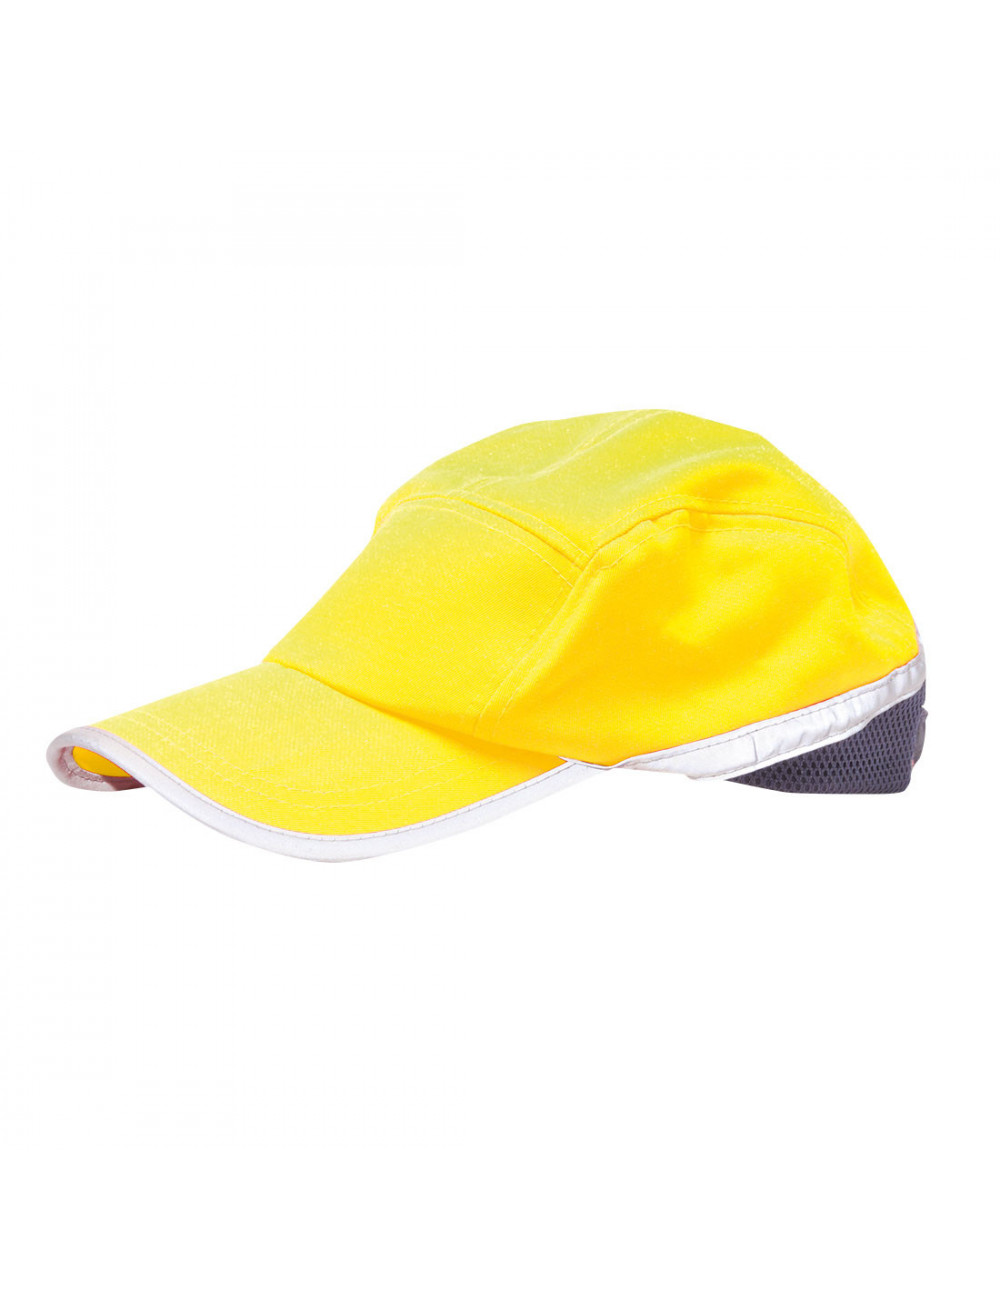 Reflective baseball cap yellow/navy Portwest